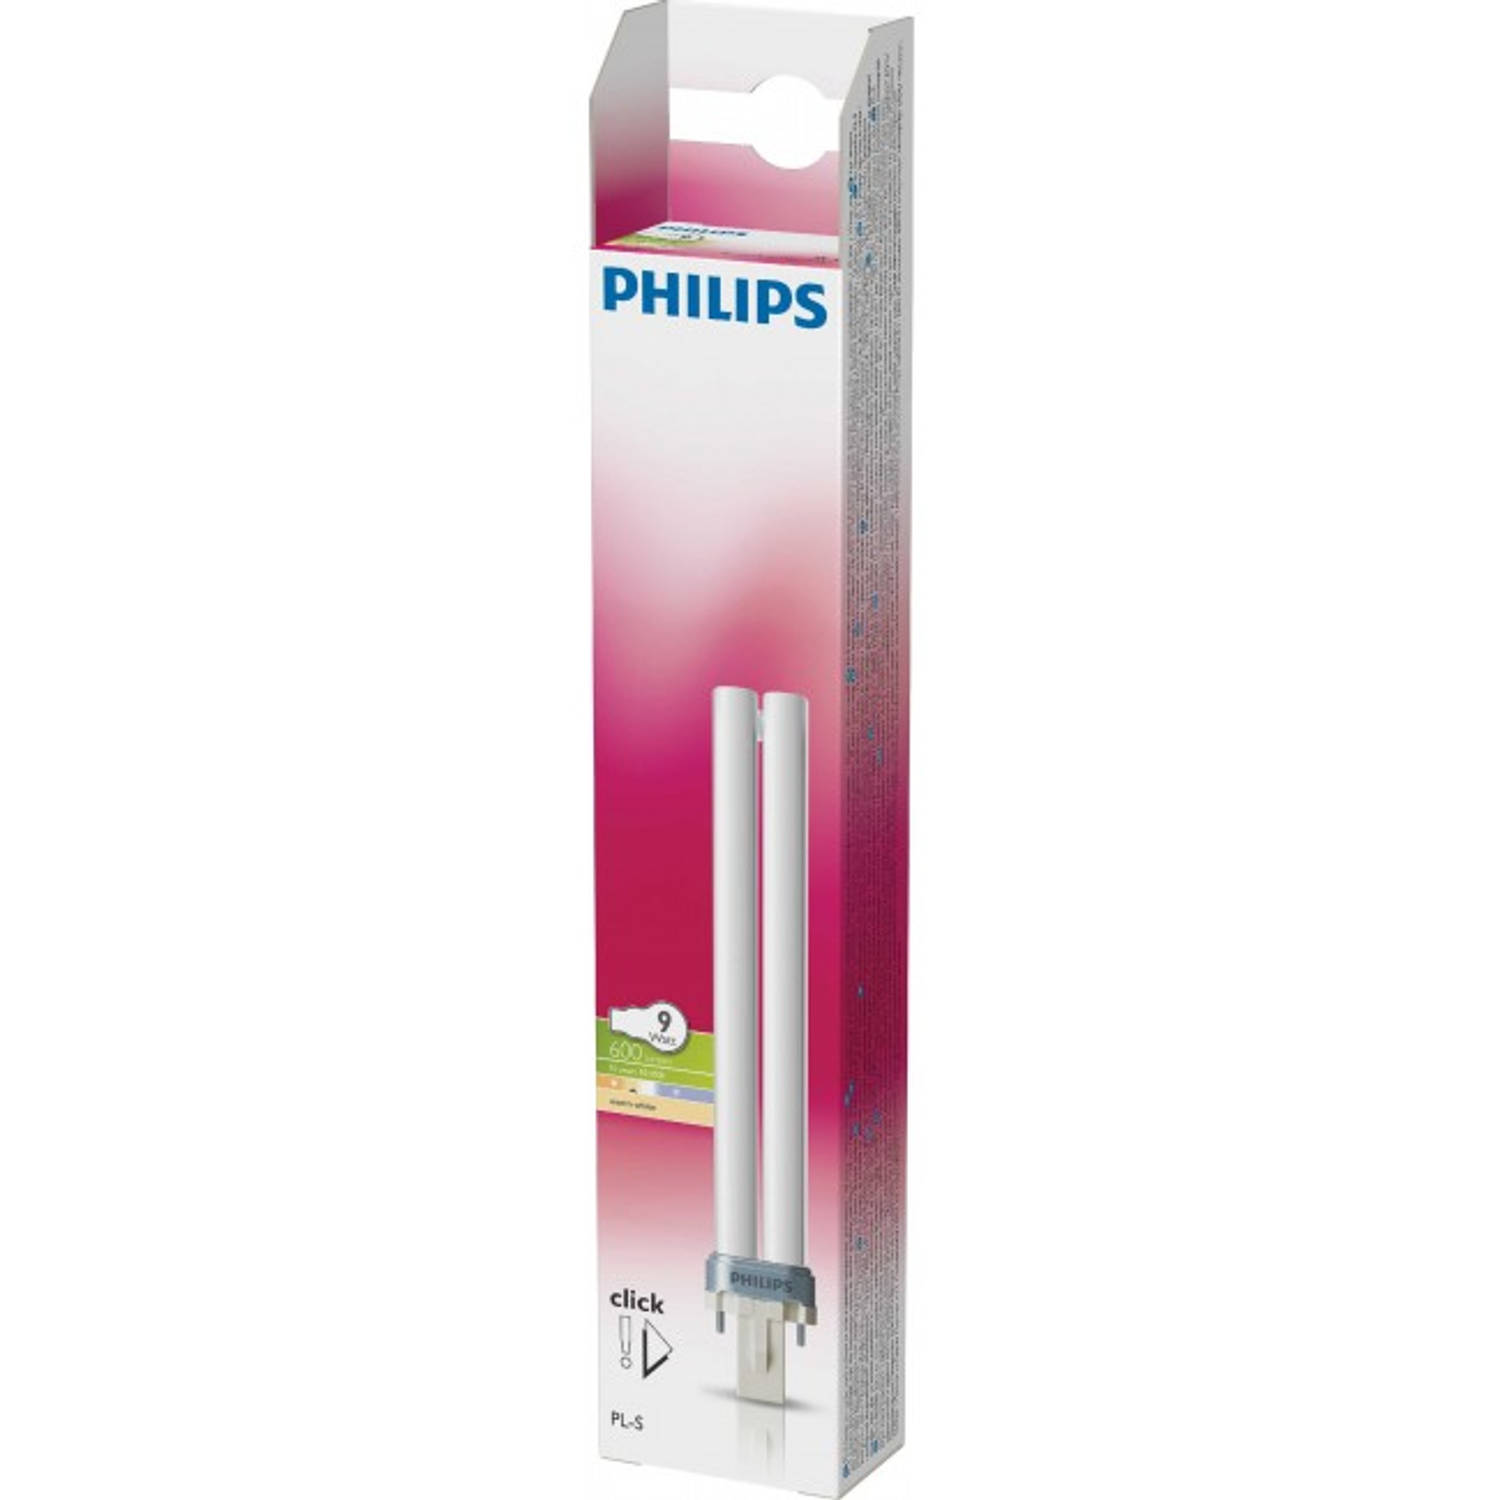 Philips PLS lamp 9 W G23